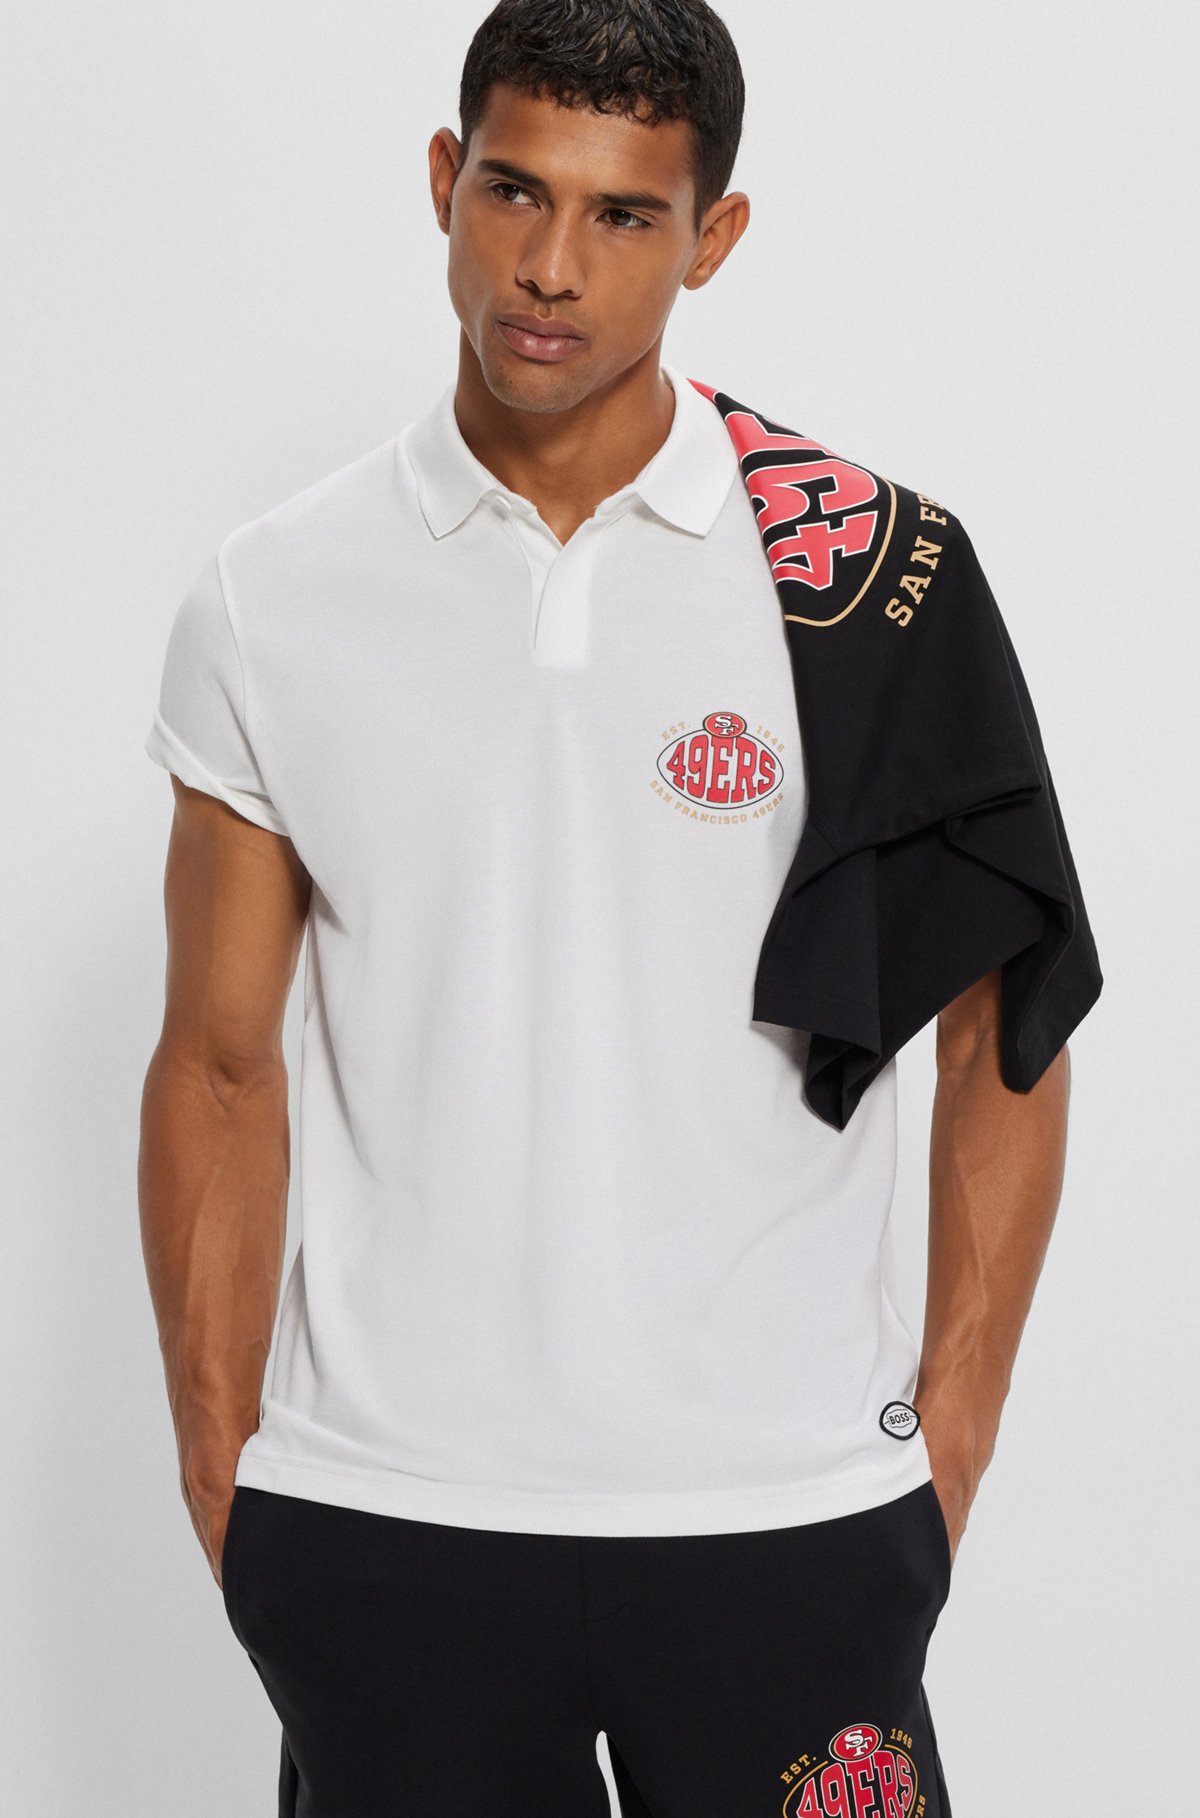 BOSS x NFL cotton-piqué polo shirt with collaborative branding, 49ers